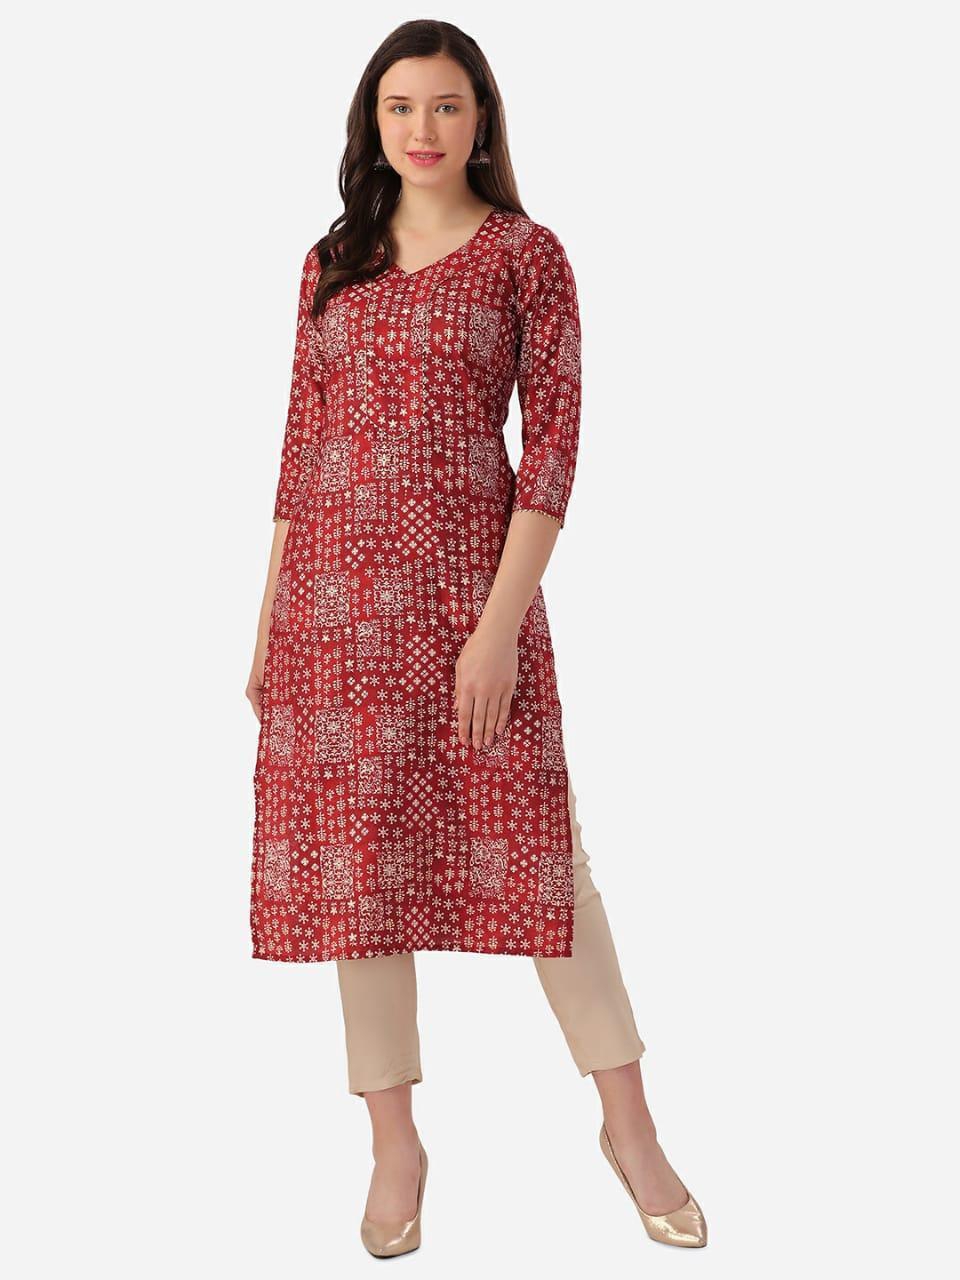 http://www.craftsvilla.com/searchresults?searchby=product&q=honest+fashion  | Saree designs, Saree, Cotton saree